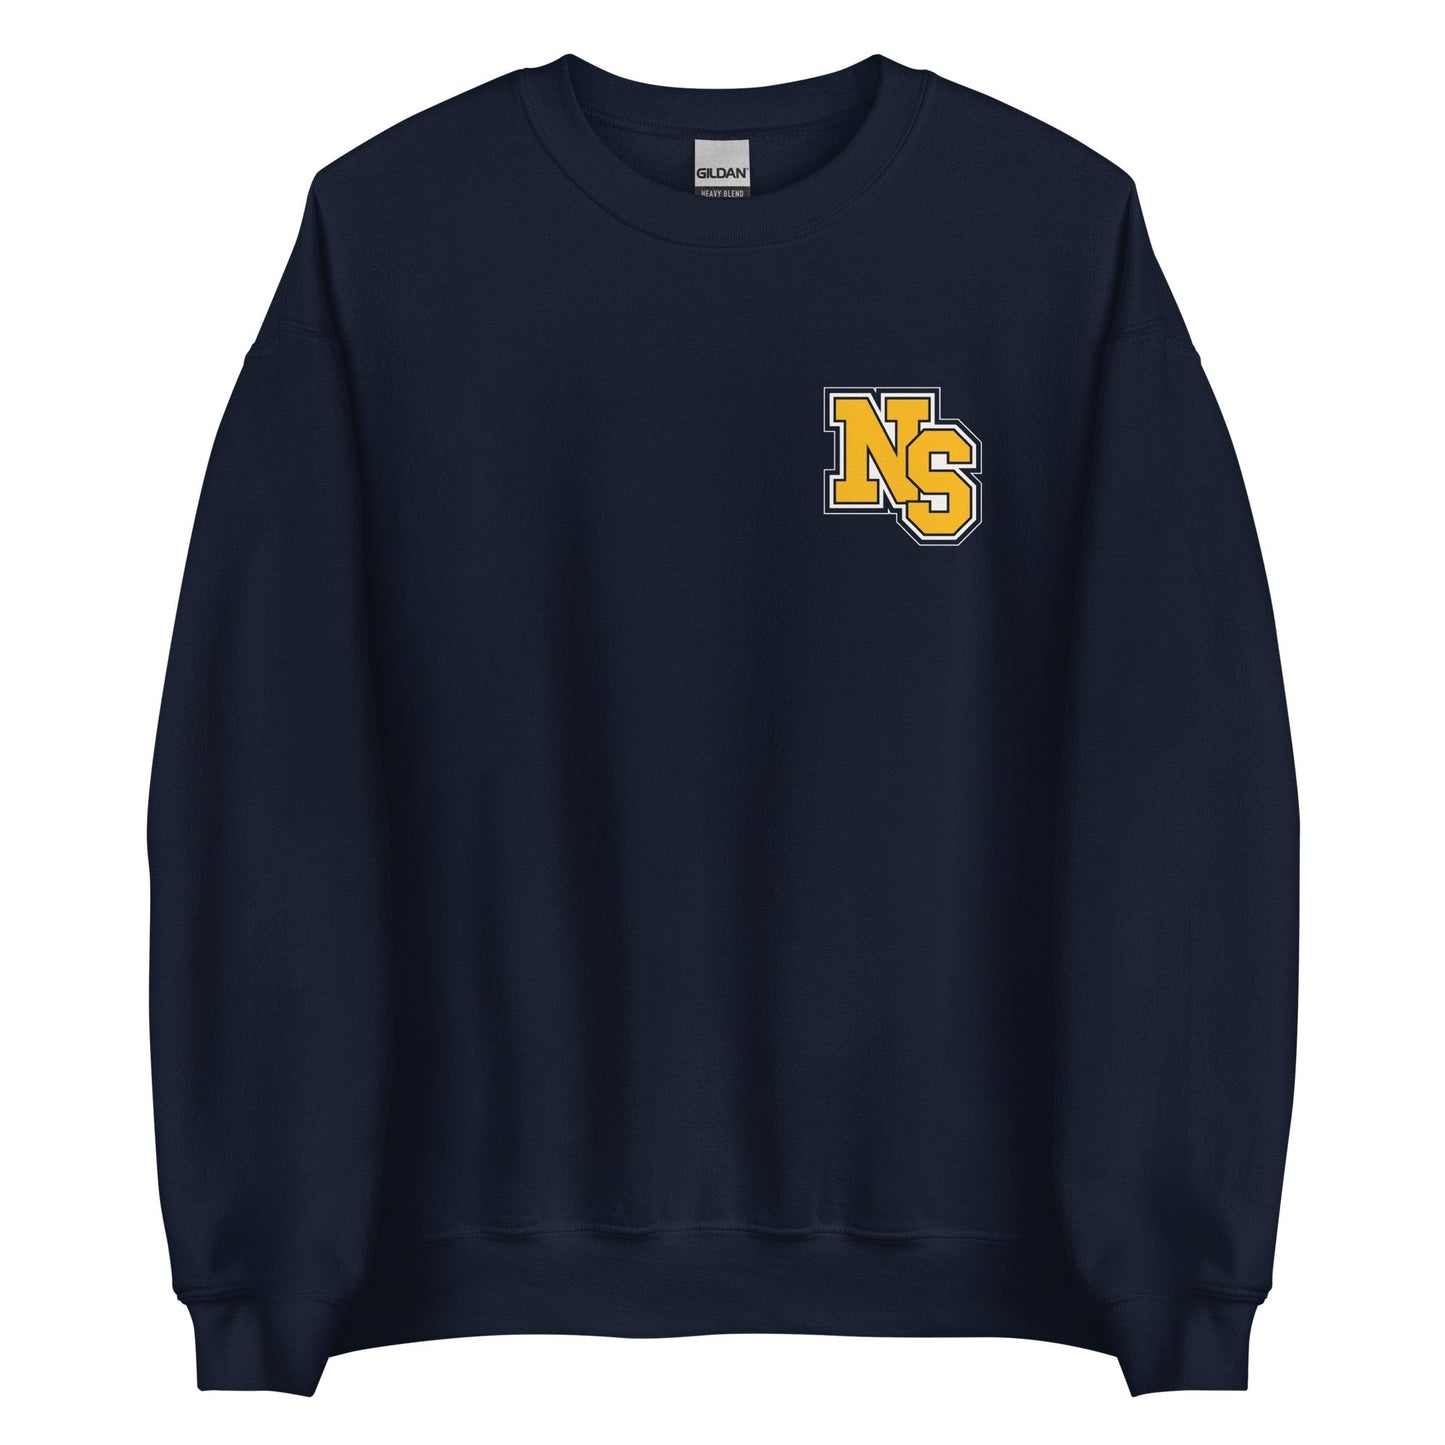 Mean Girls Musical Lions Adult Sweatshirt - Paramount Shop